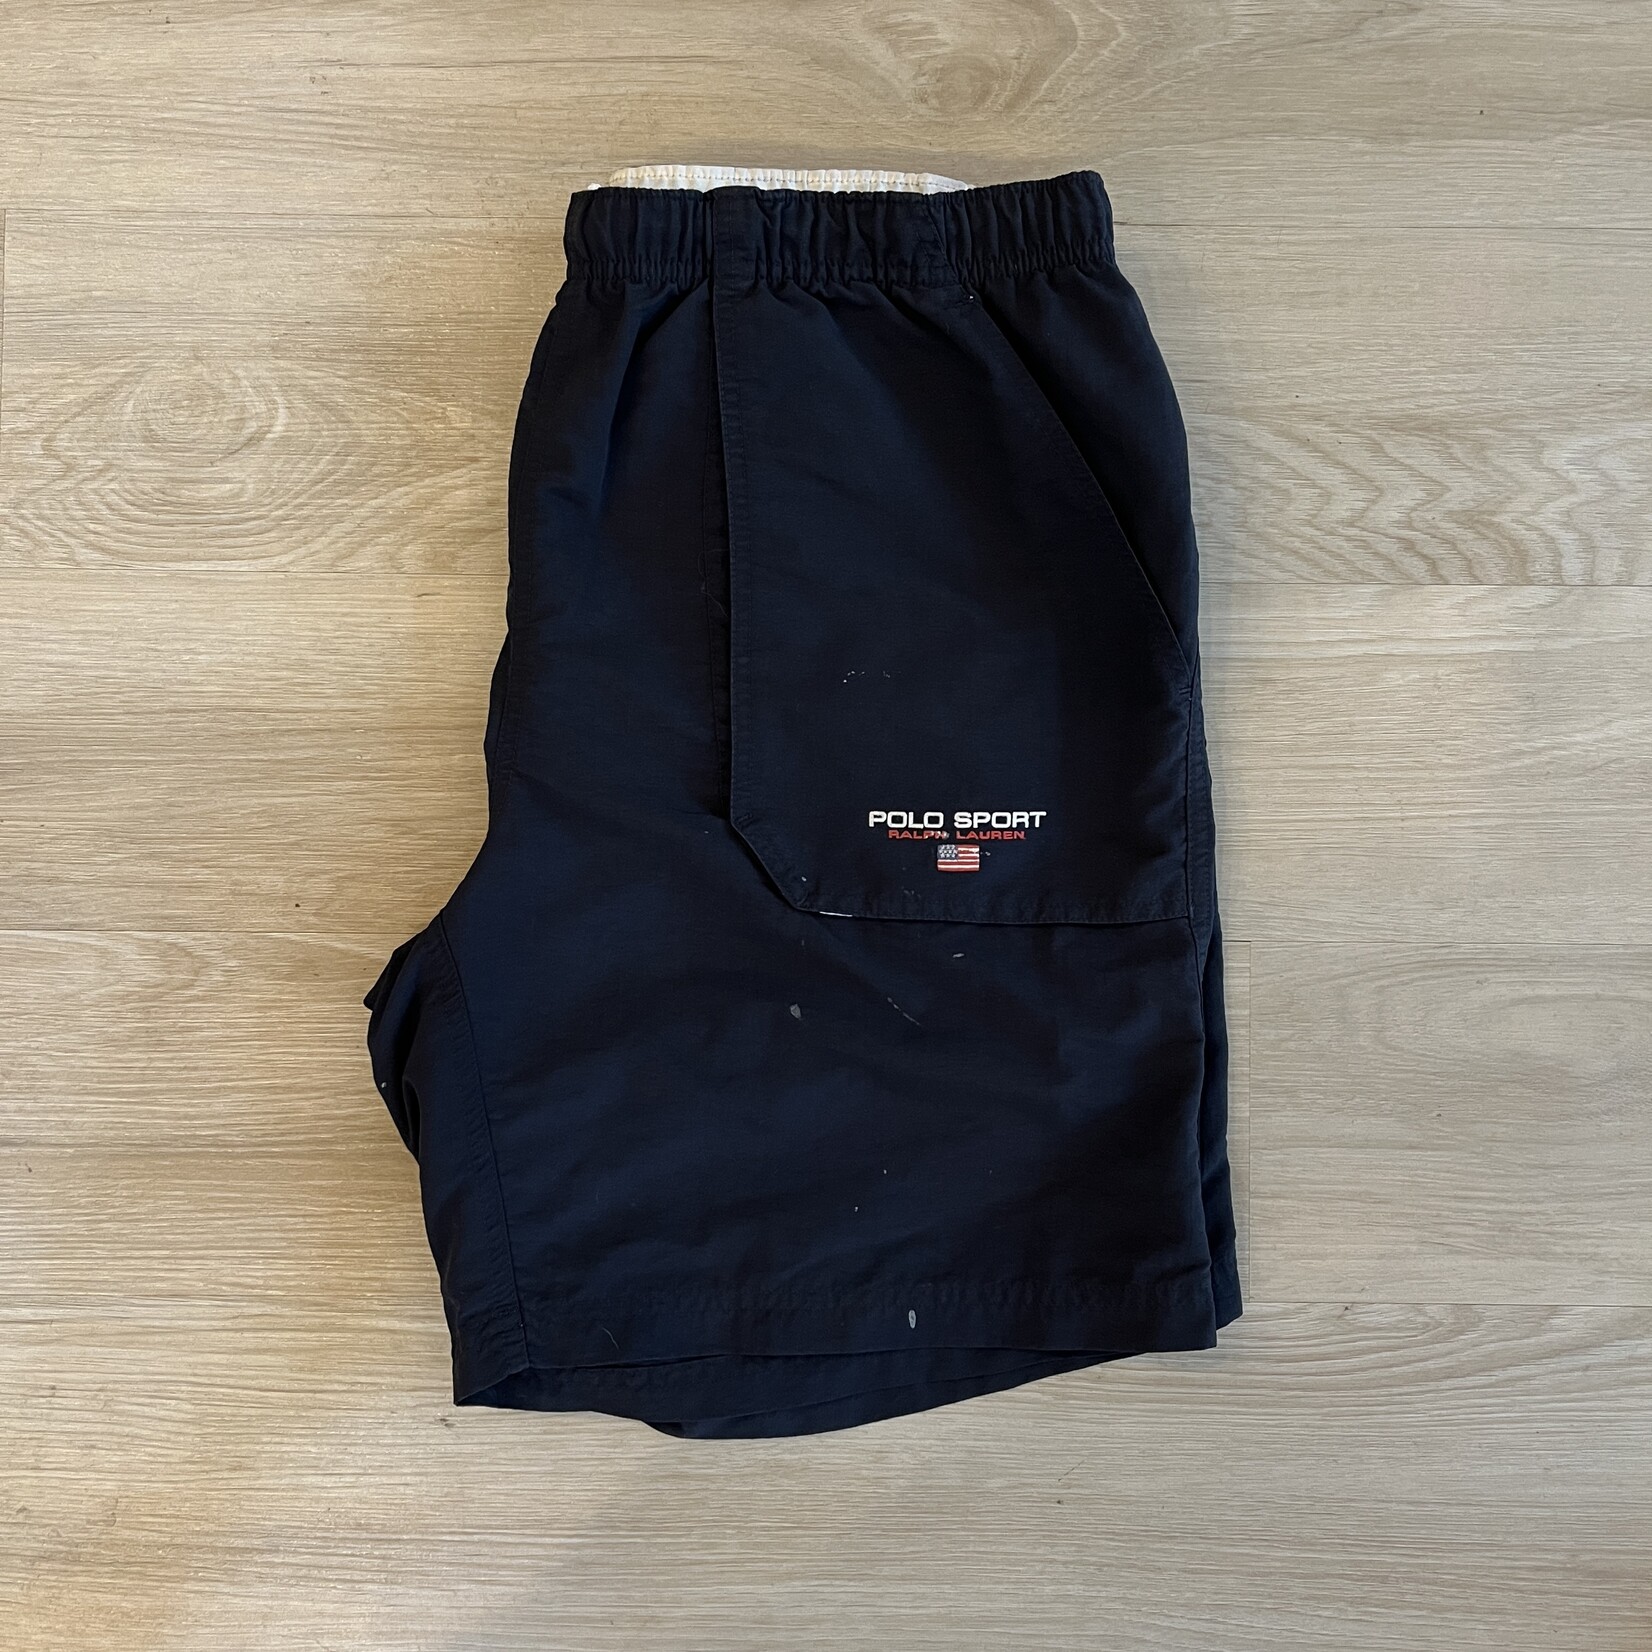 13752	polo sport shorts black sz L